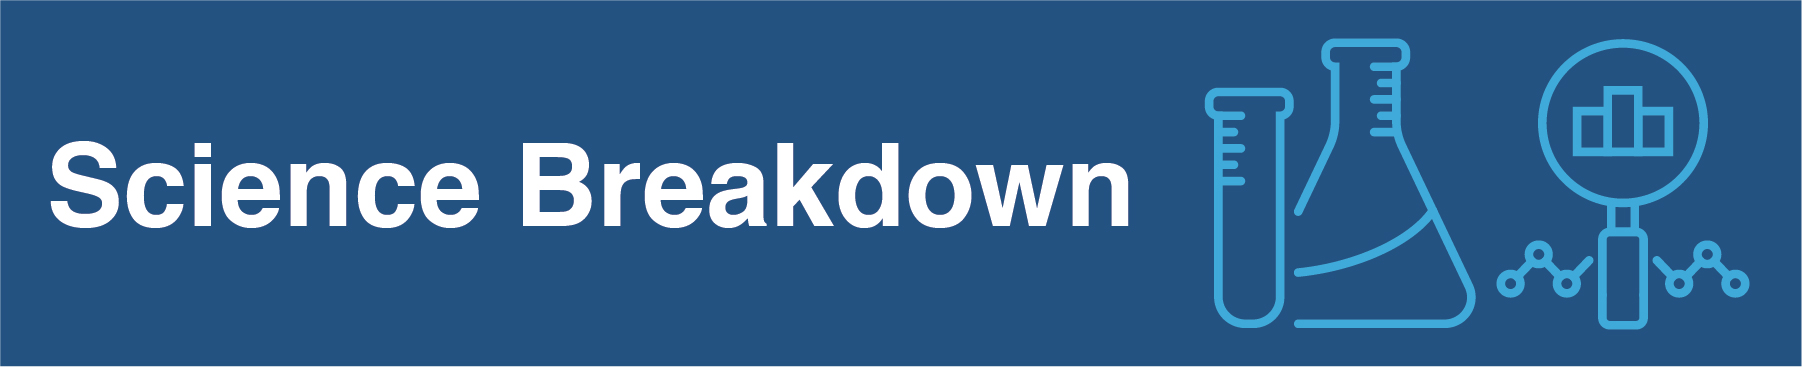 Science Breakdown logo